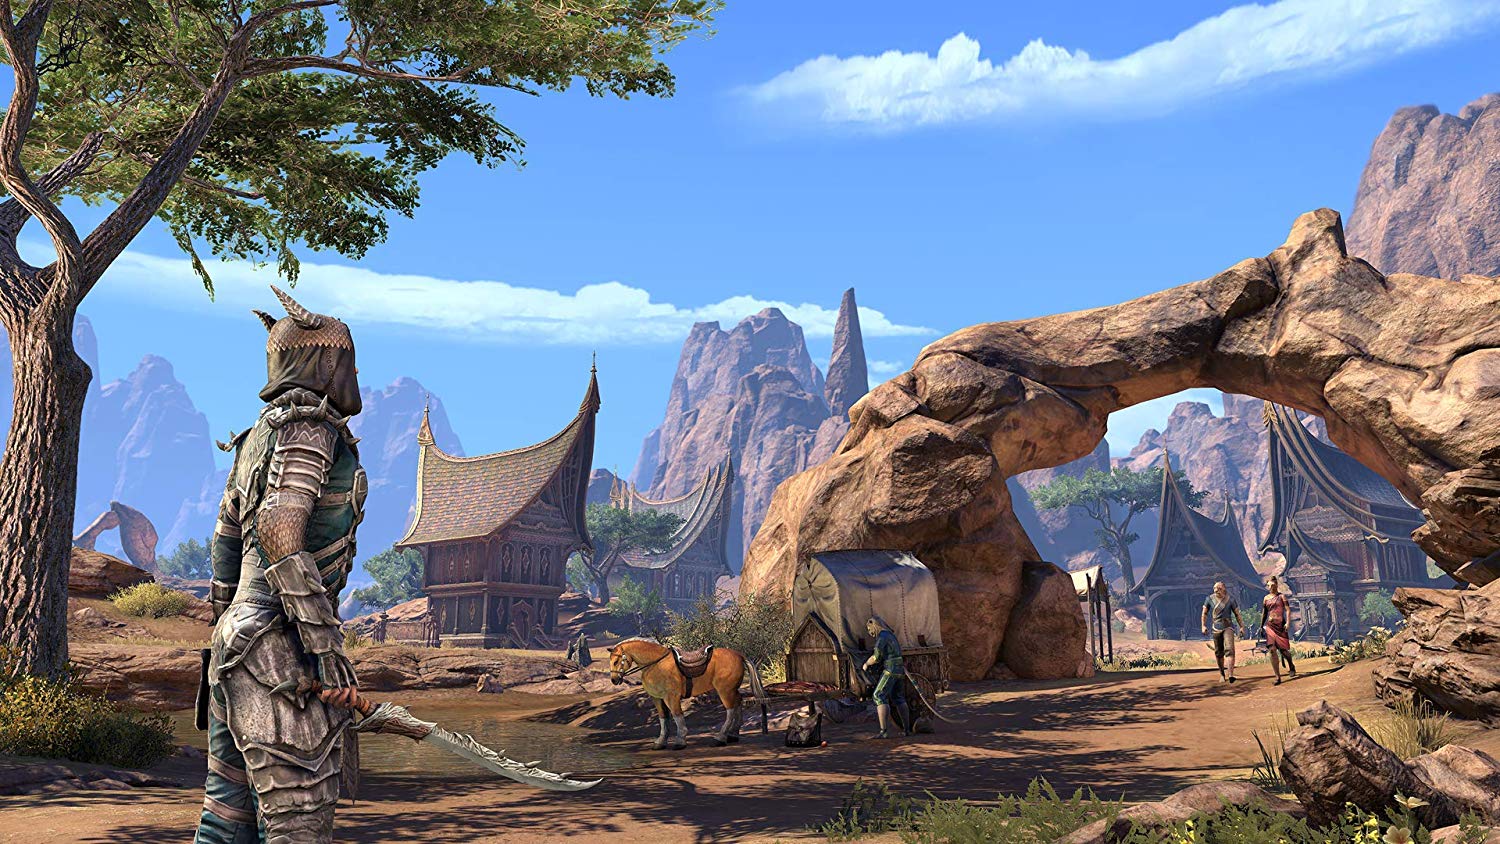 The Elder Scrolls Online: Elsweyr - PlayStation 4 Video Games Bethesda   